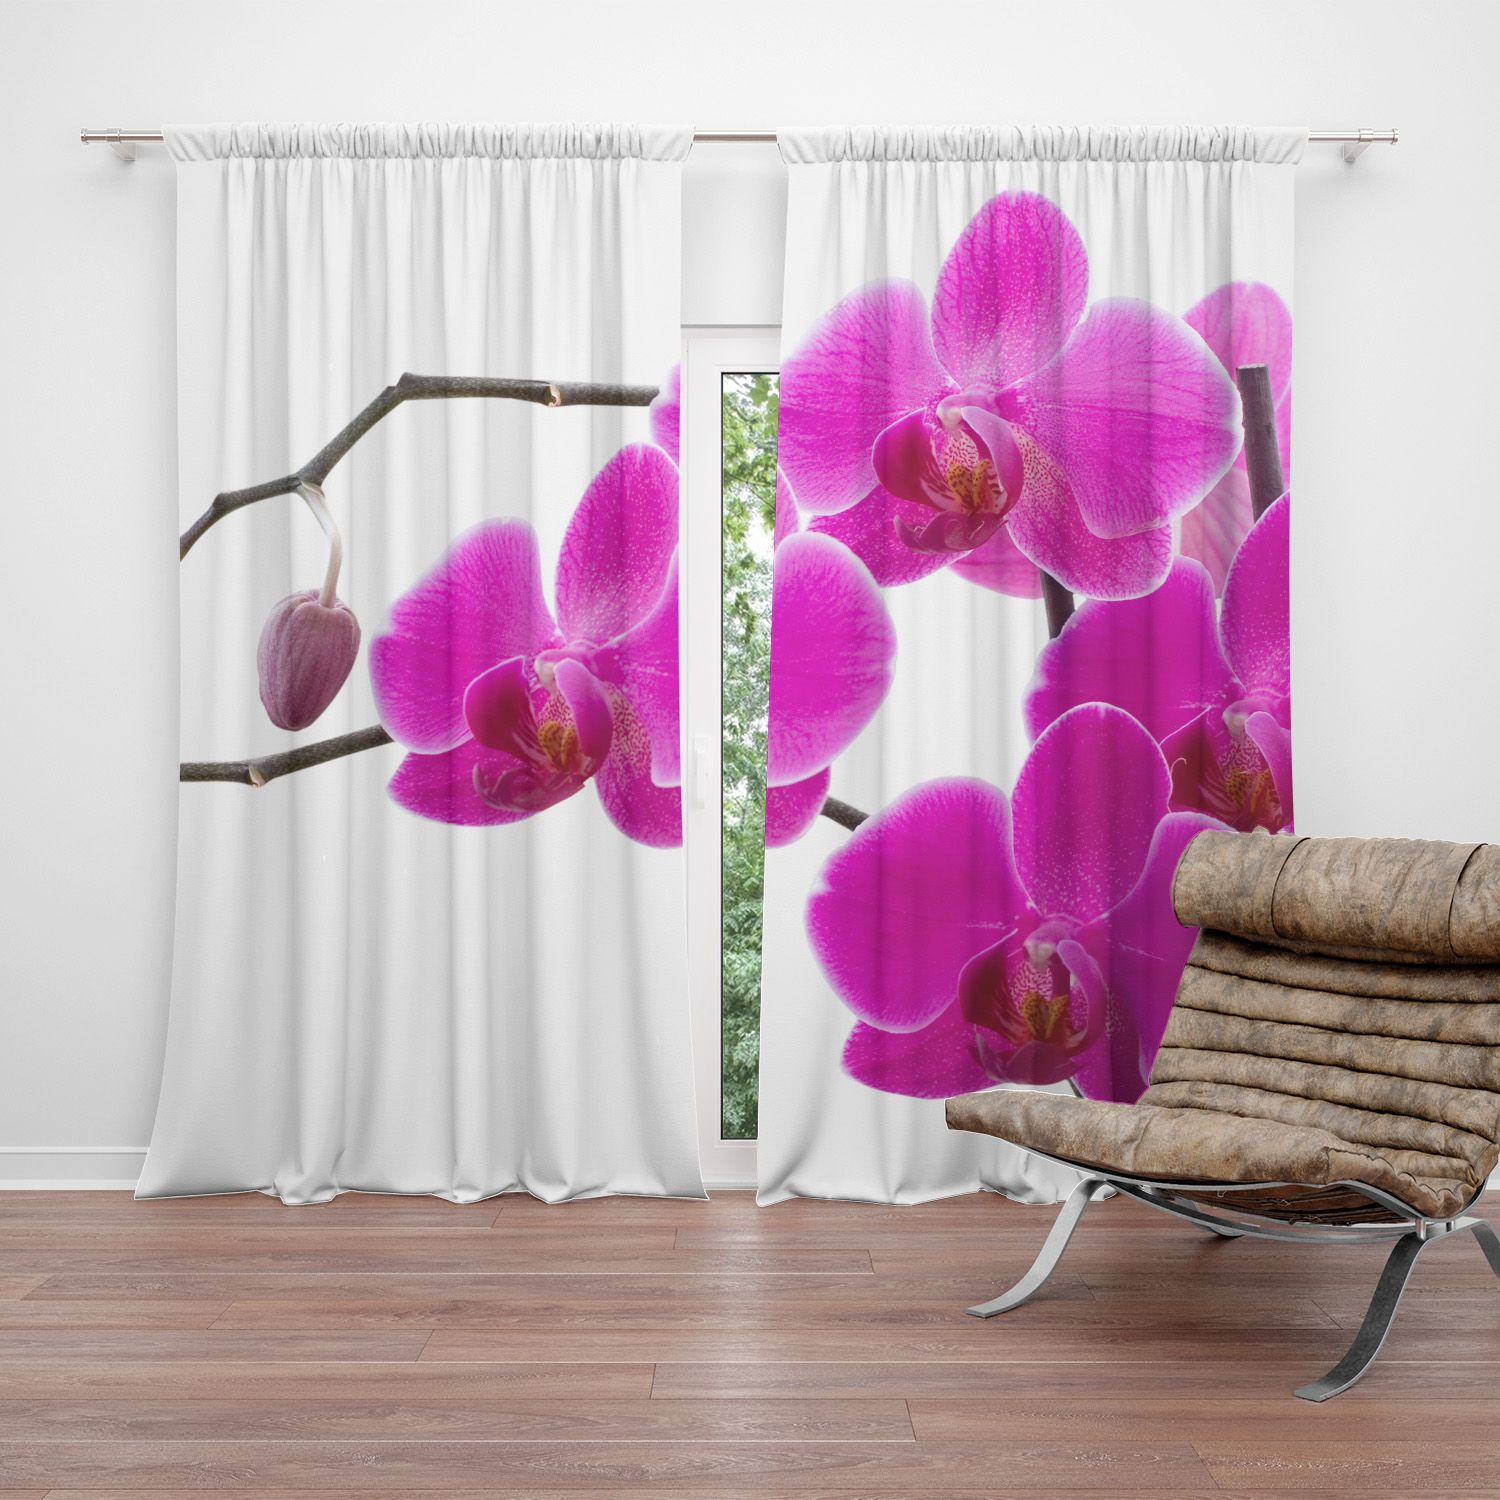 Závěs SABLIO - Fialové orchideje 2ks 150x250cm - E-shop Sablo s.r.o.